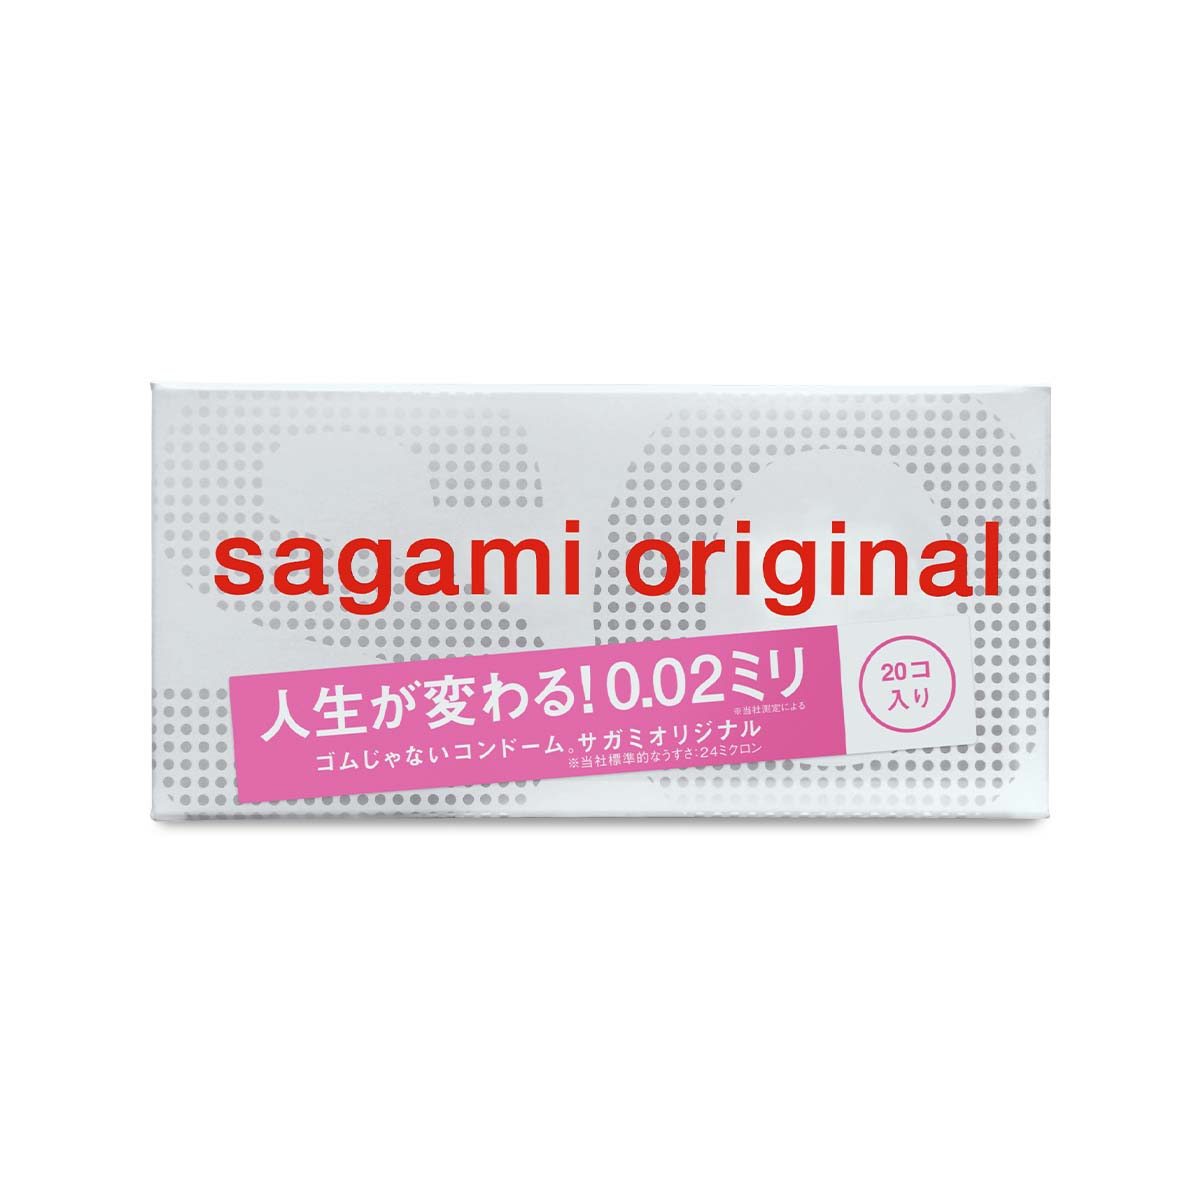 Sagami Original 0.02 20